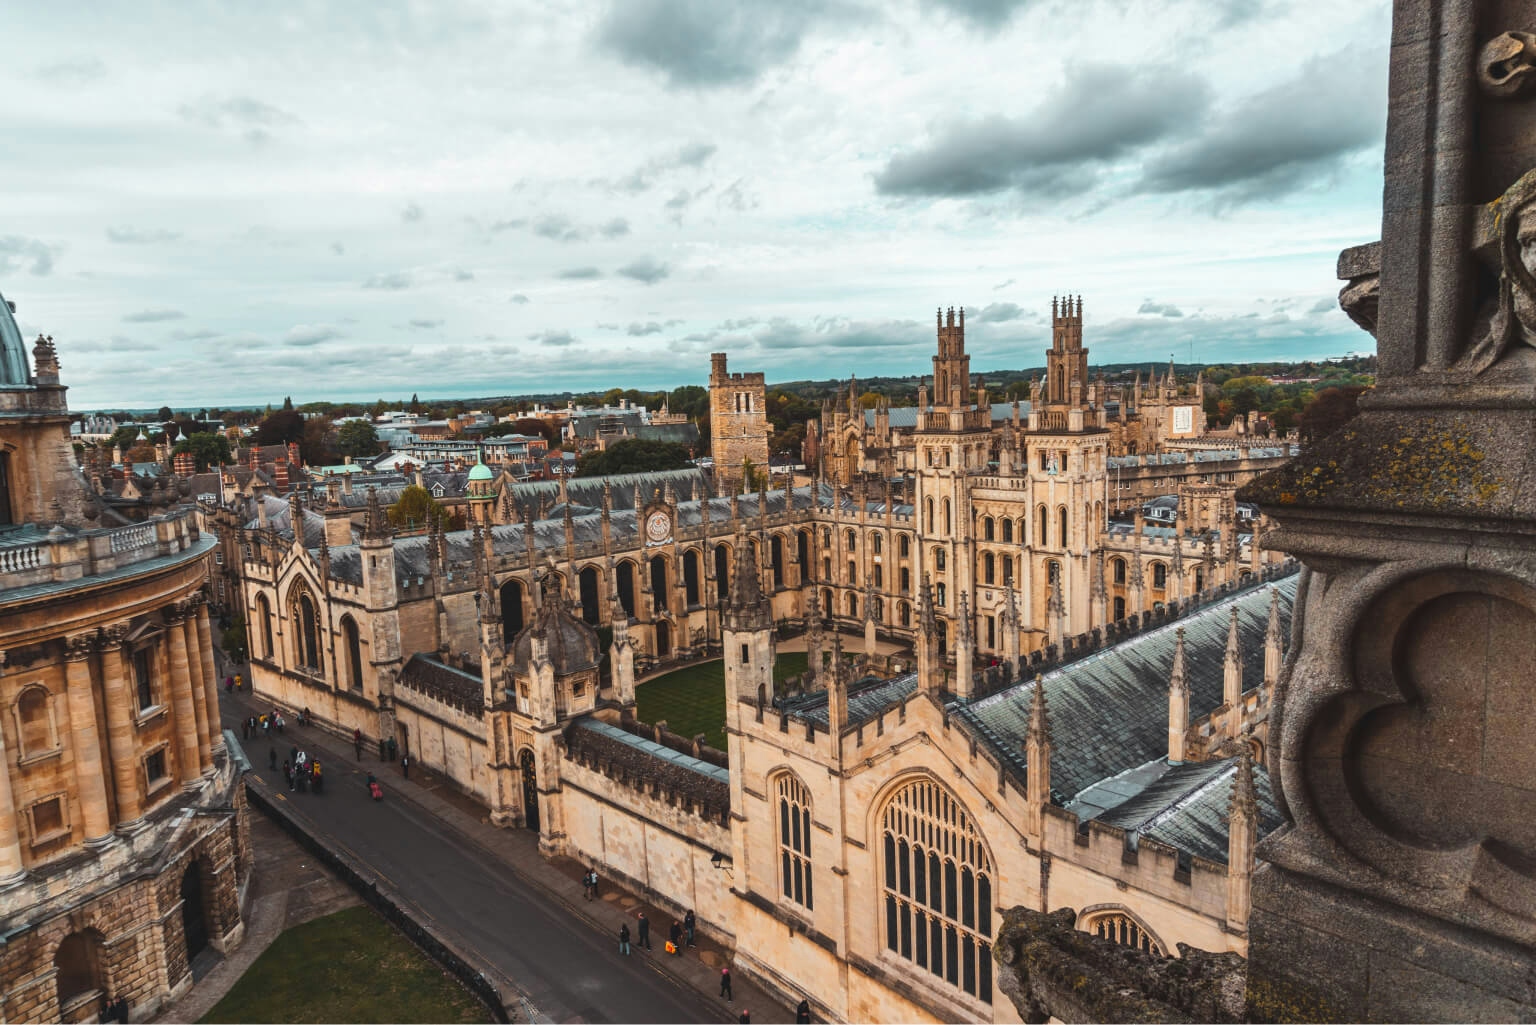 Birds Eye View of an Oxford University Building